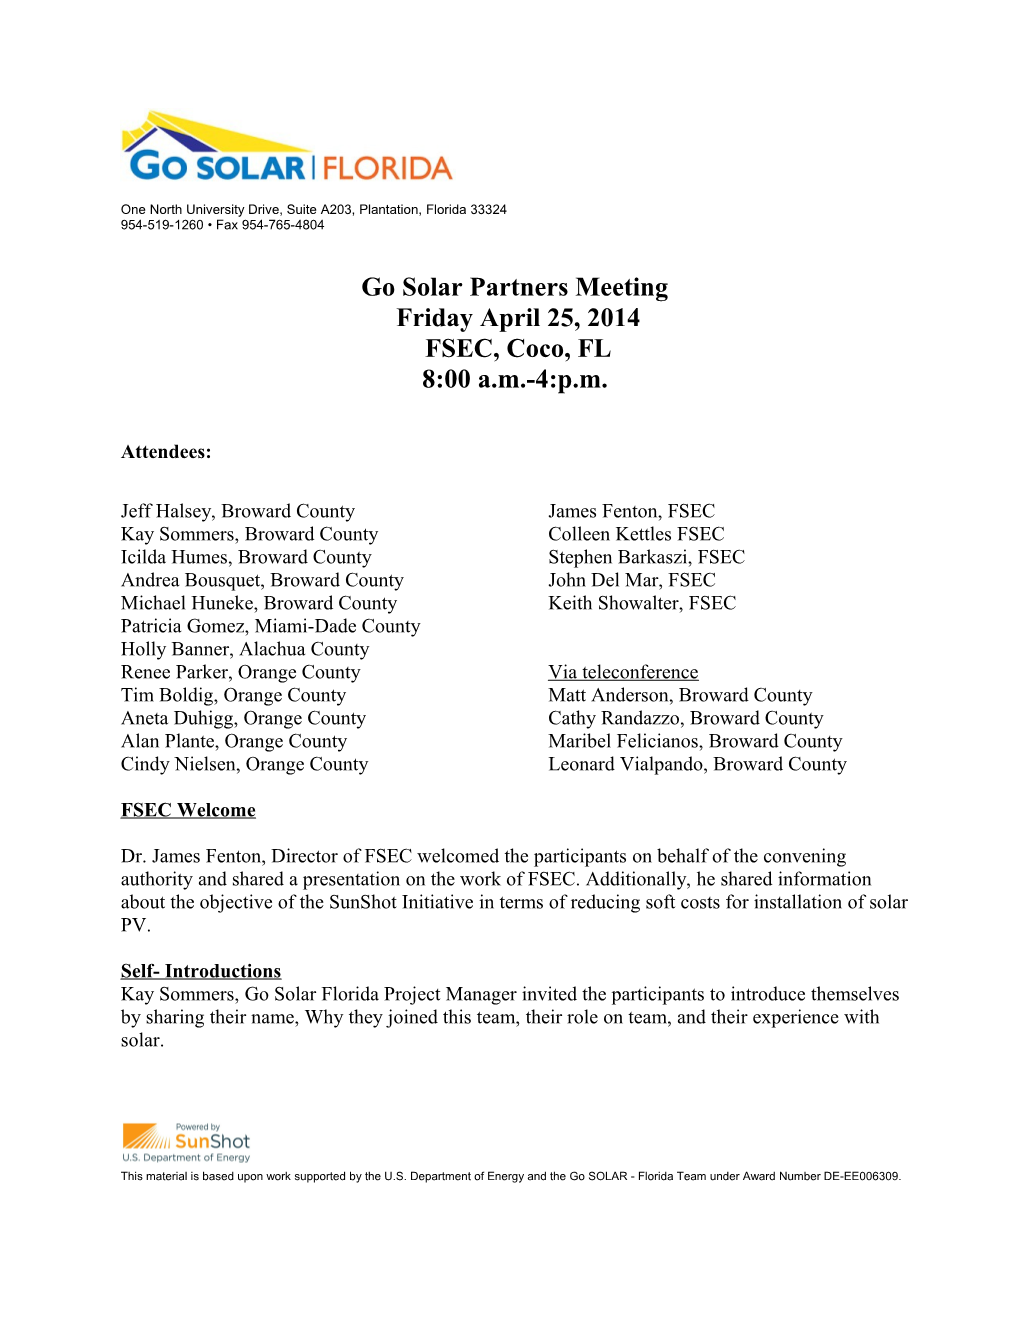 Go Solar Partners Meeting